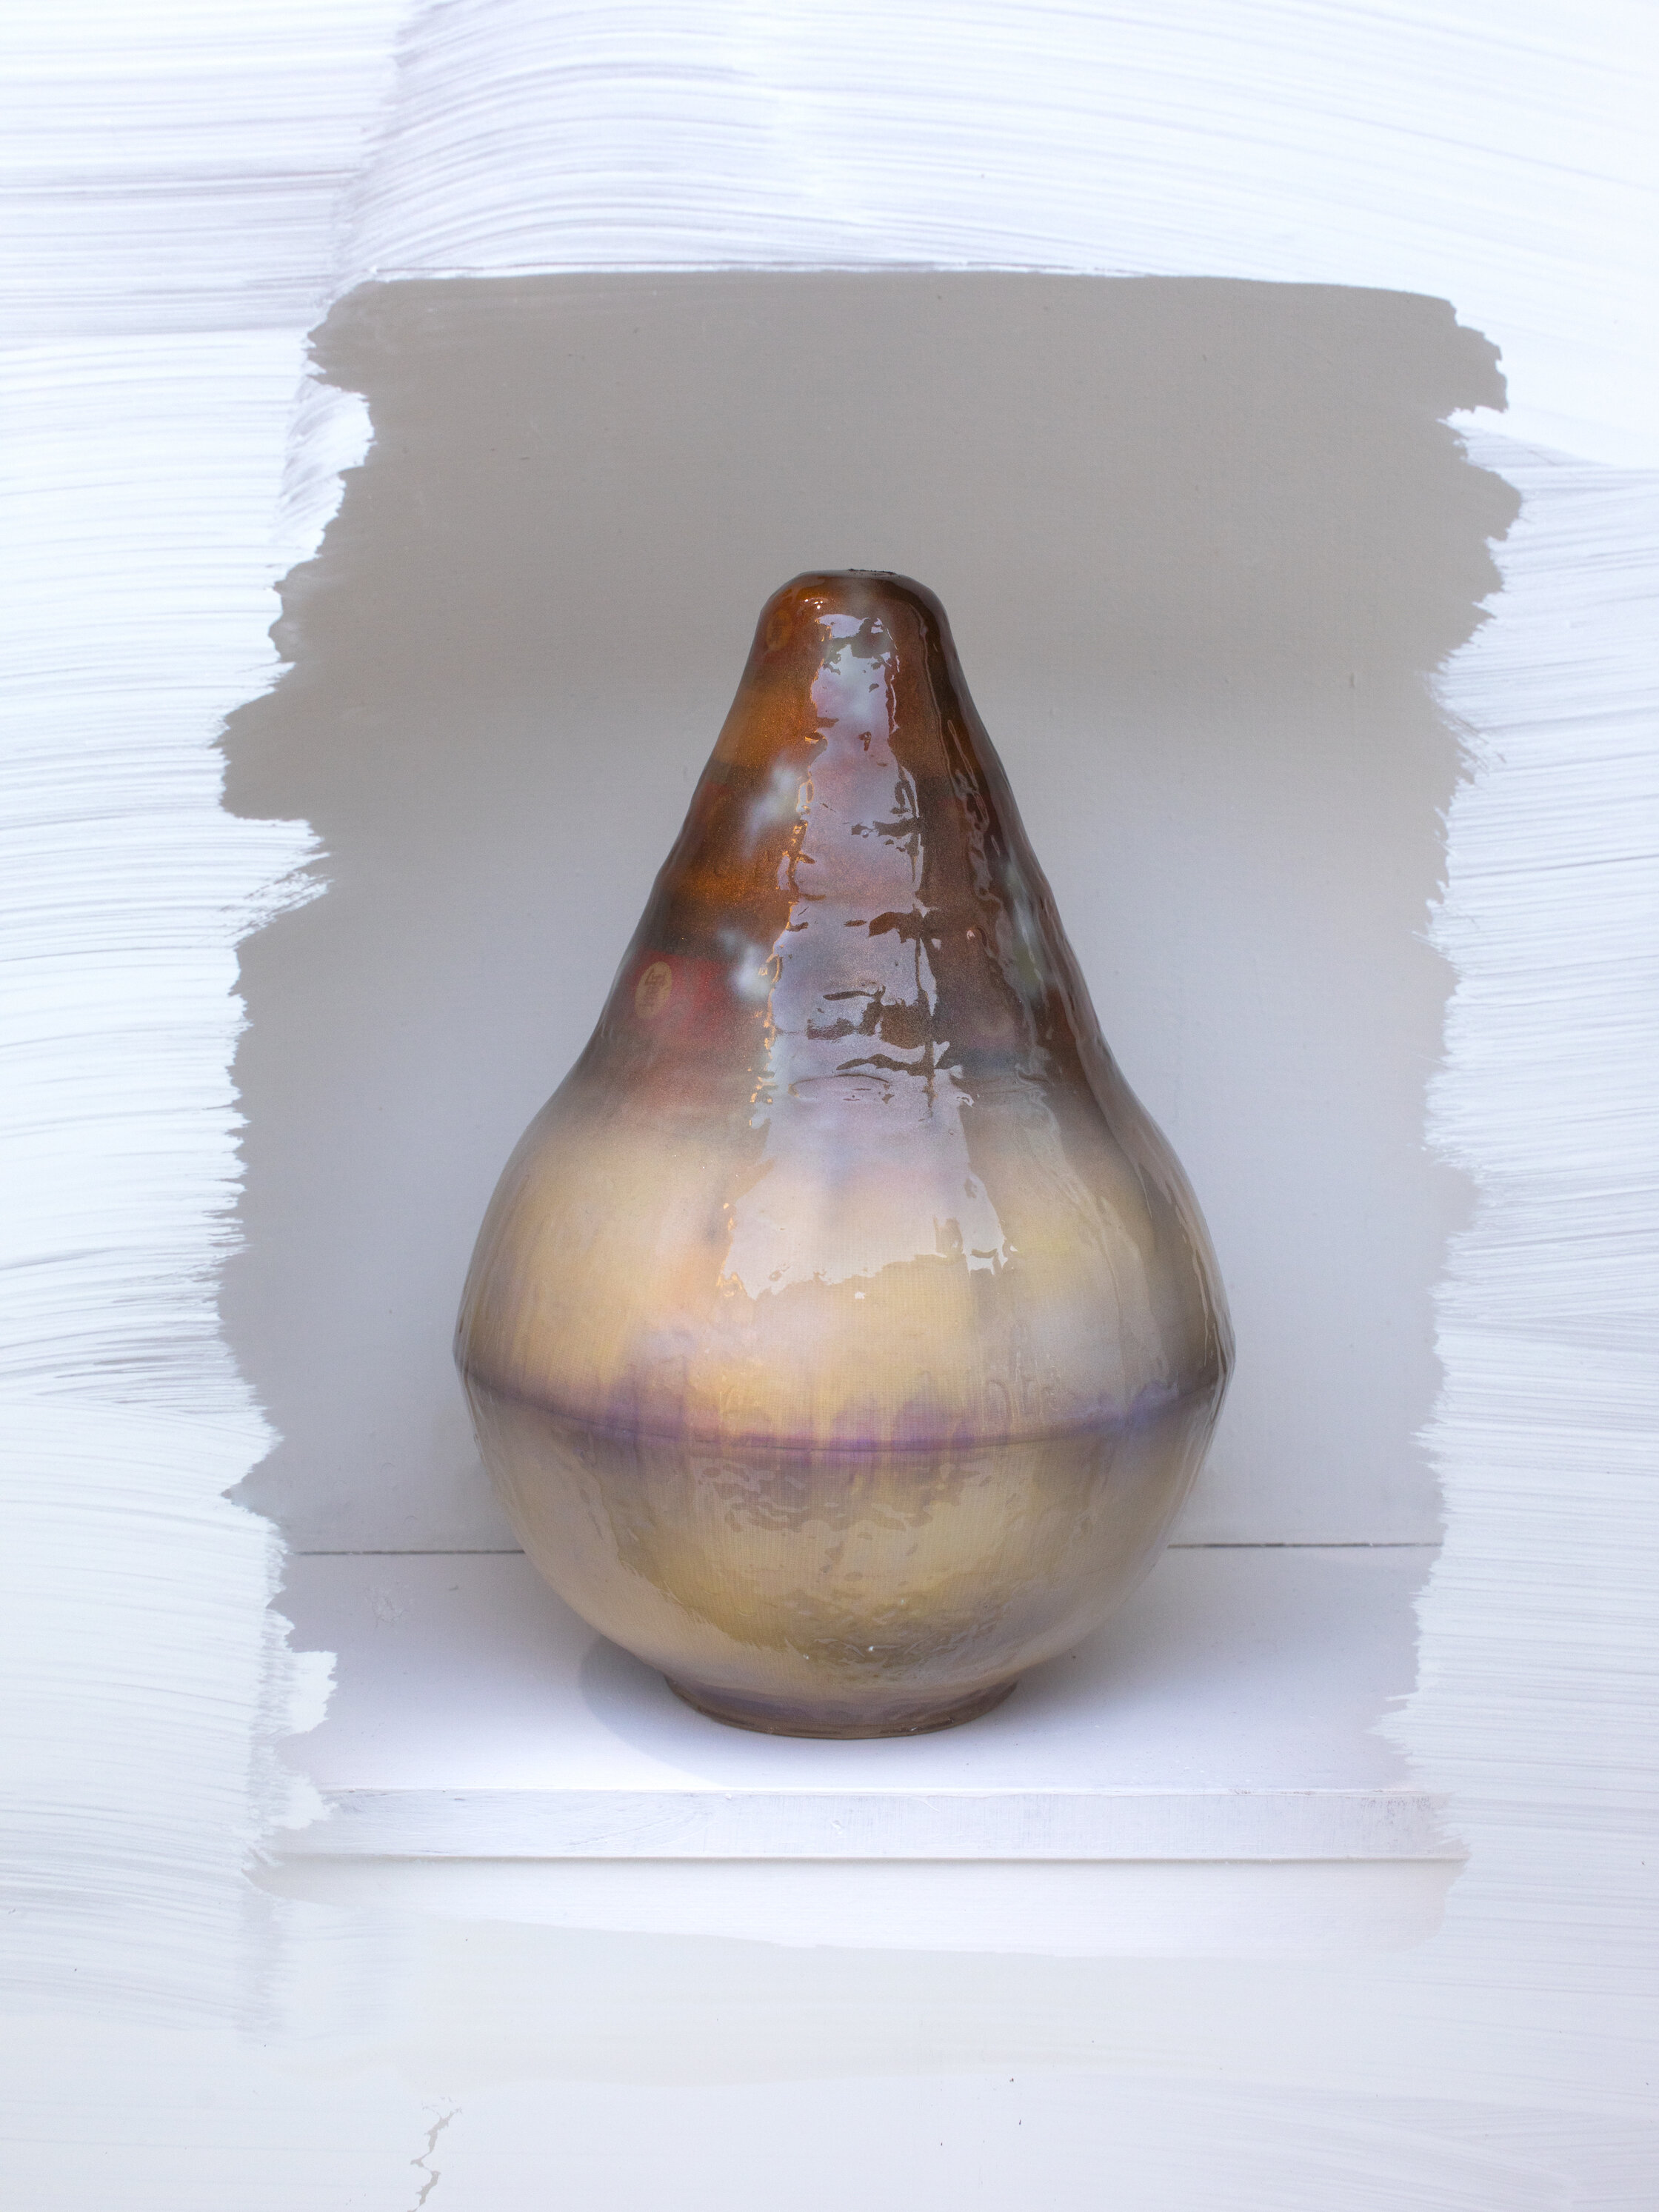  Kim Farkas,  10-09 , custom composites, melamine bowls, 26 x d.17 cm, 2019  